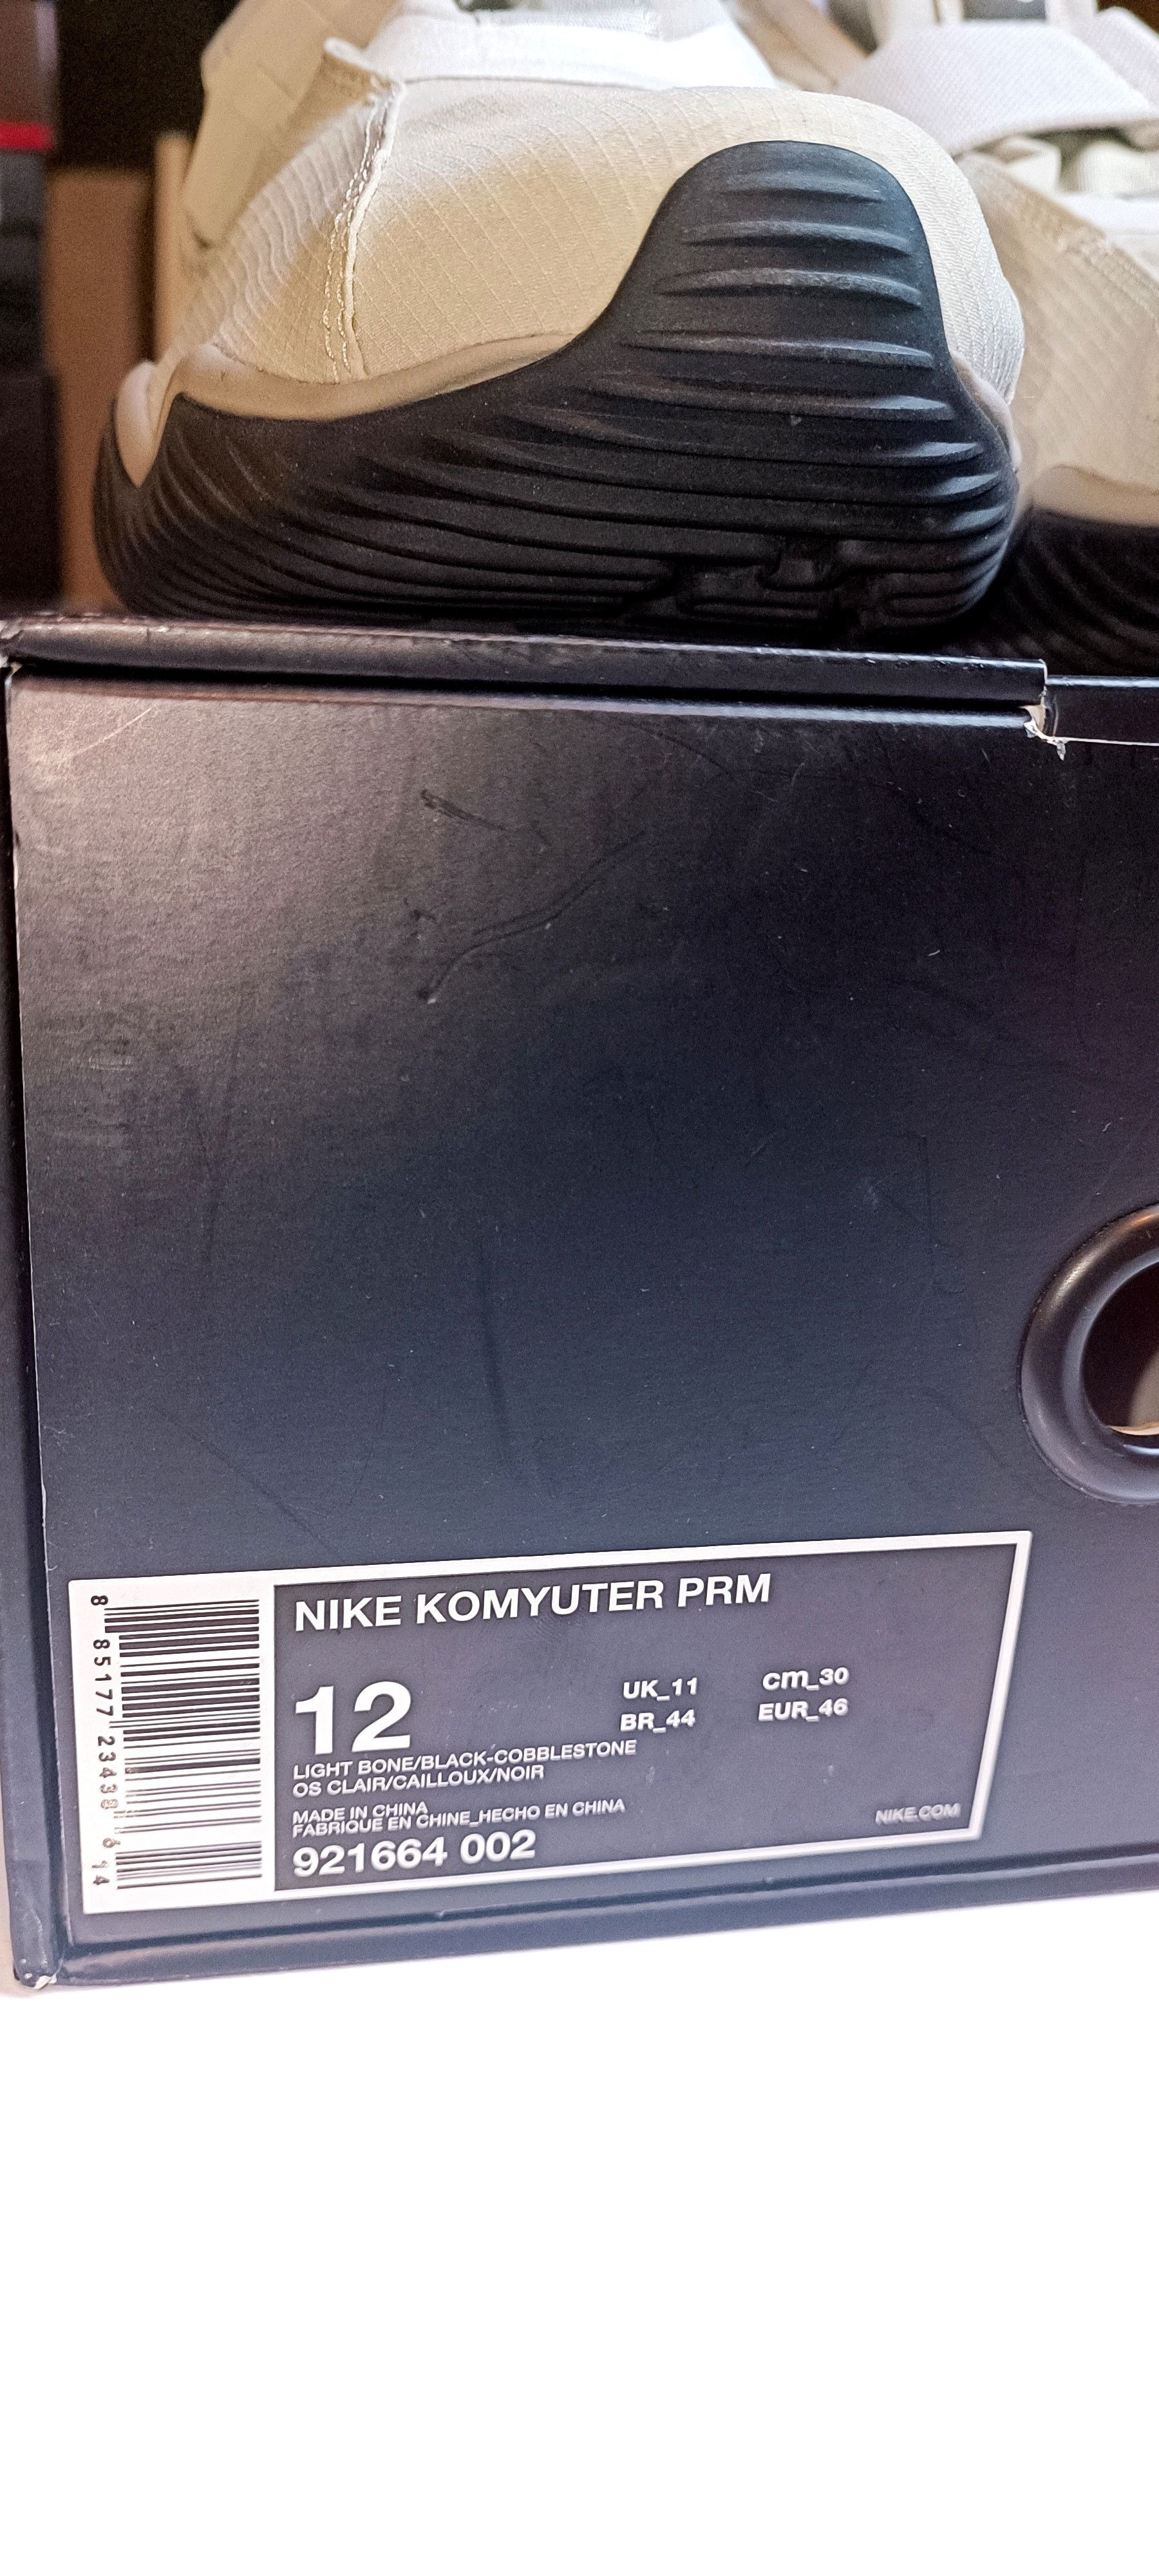 Avant Garde - Nike ACG Komyuter Premium Light Bone / Black-Cobblestone - 17